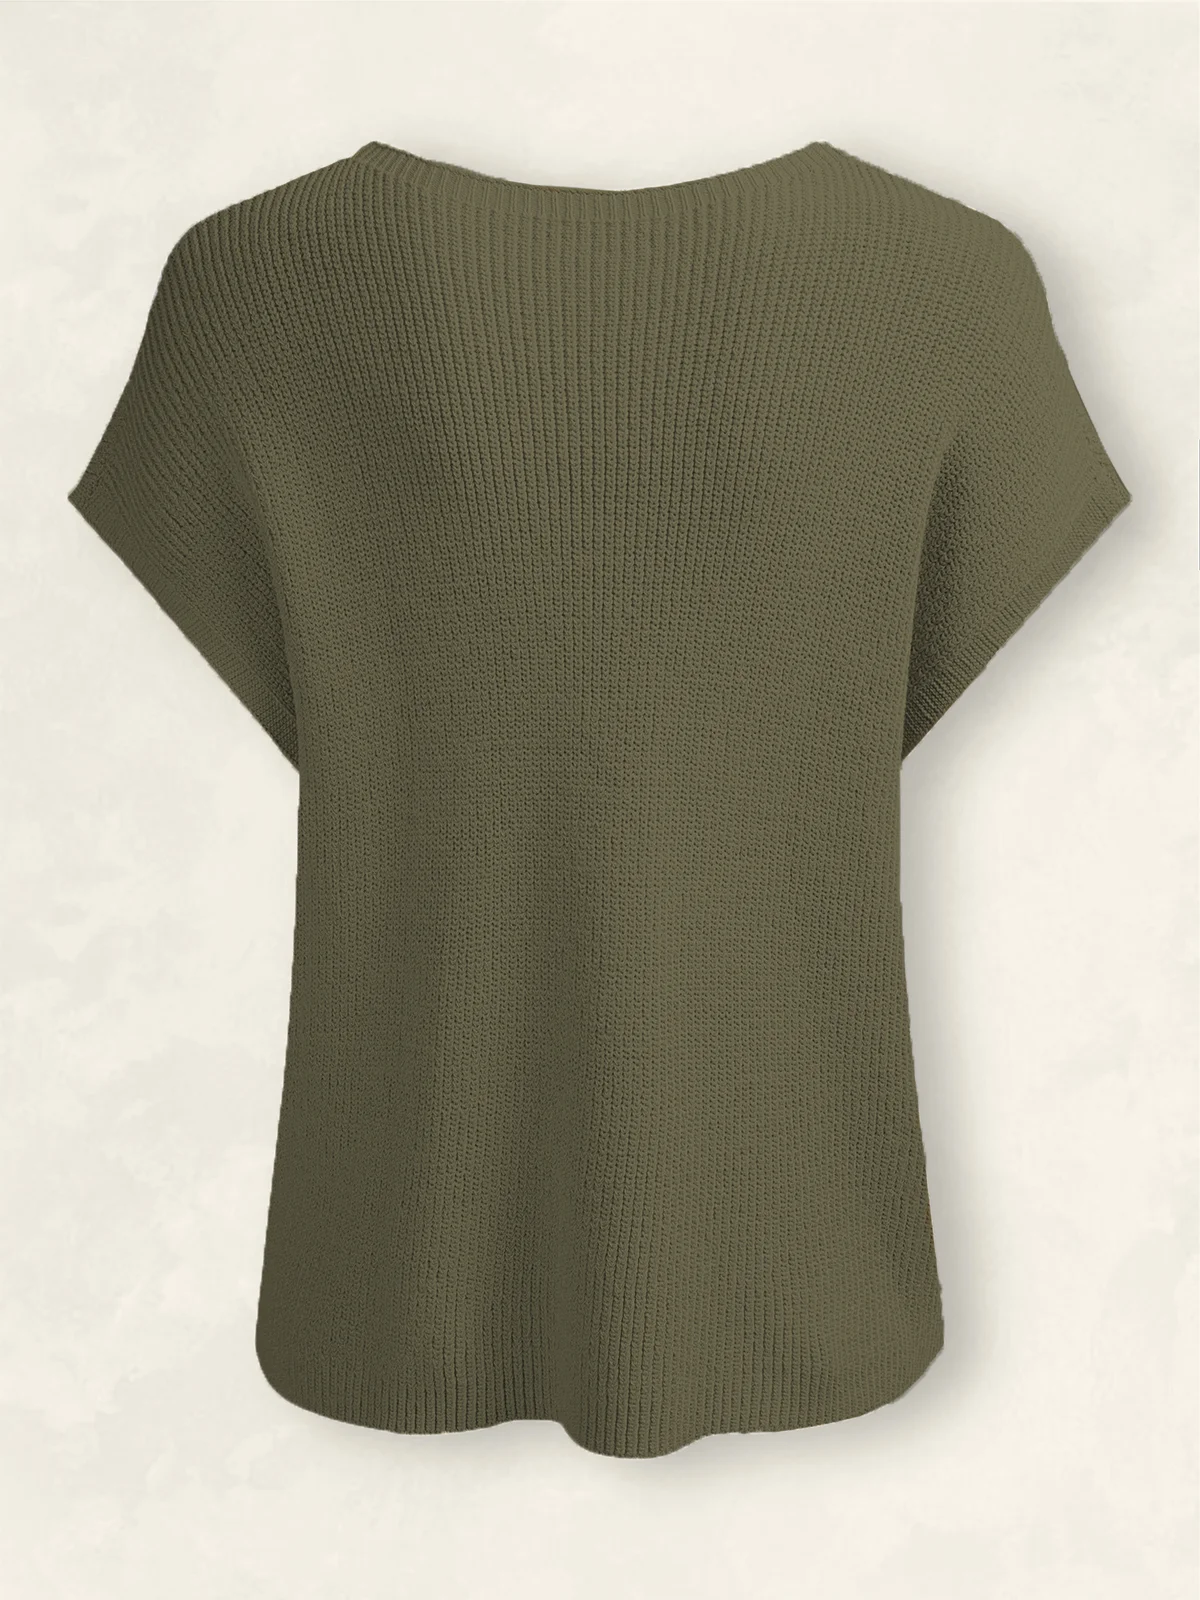 Women T-shirt Plain Short Sleeve Comfy Casual Sweater Top